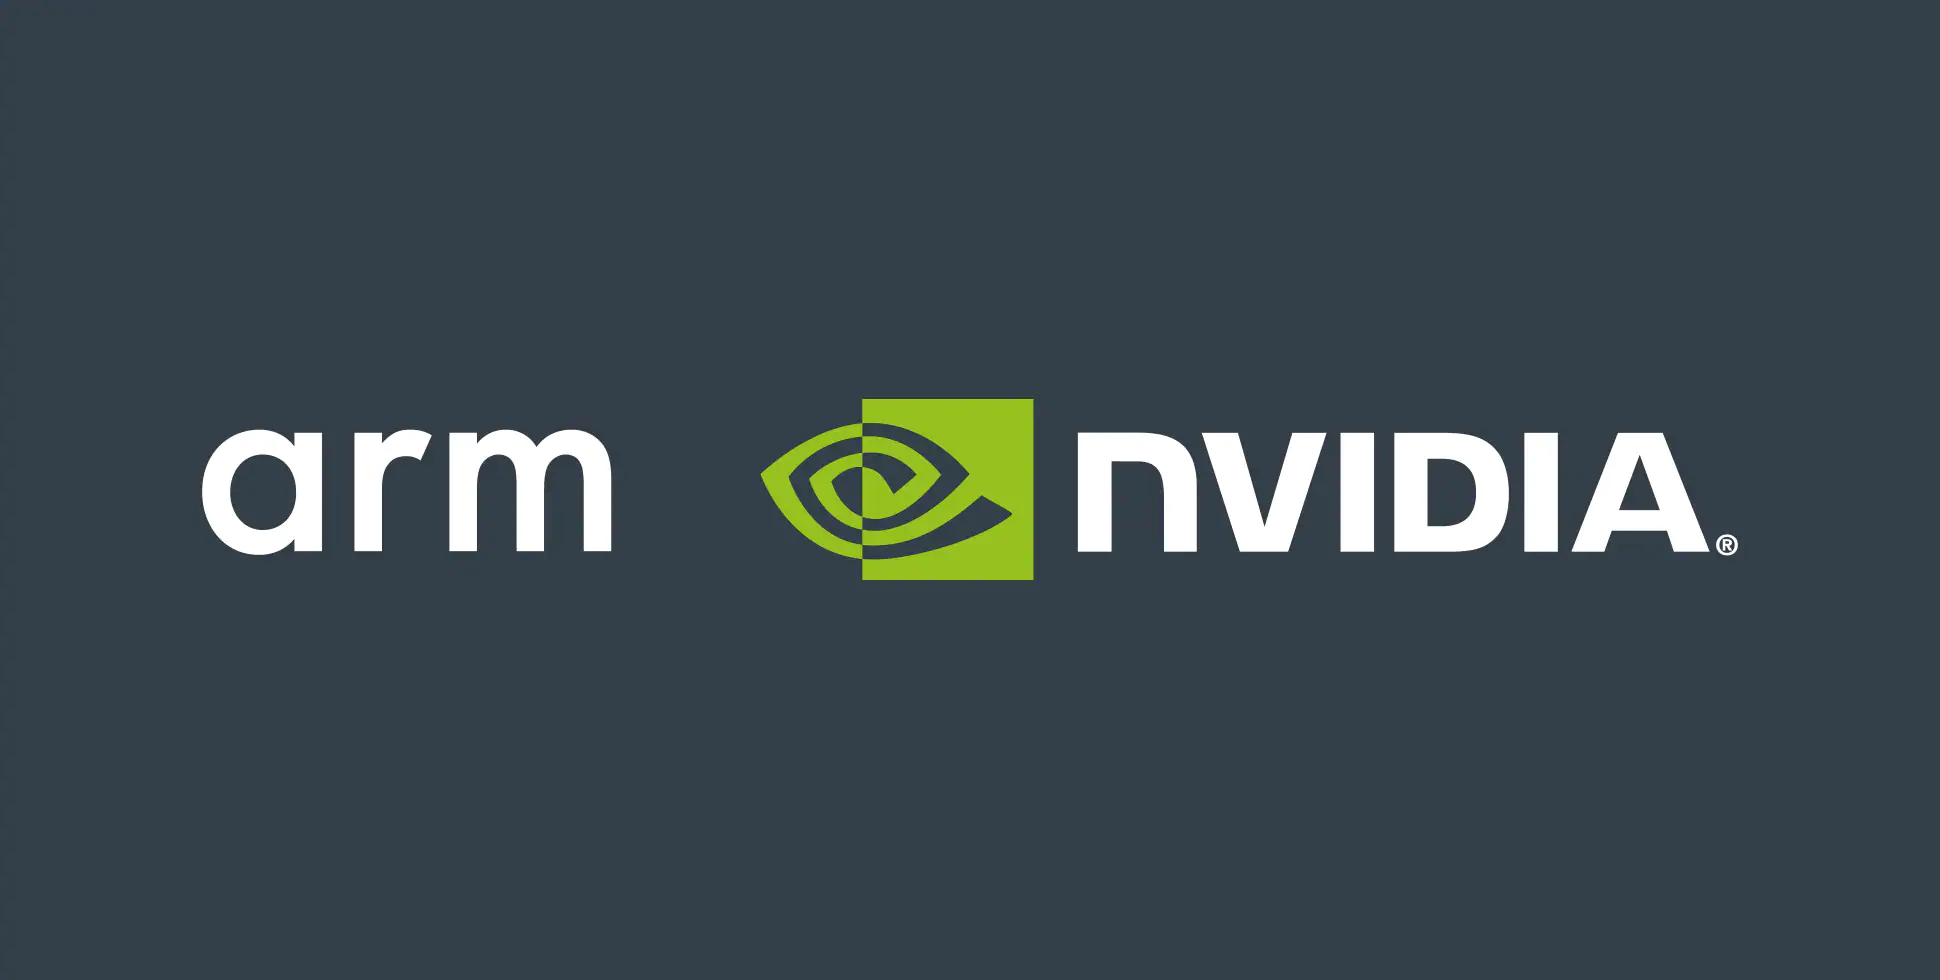 Nvidia Arm deal benefits both parties